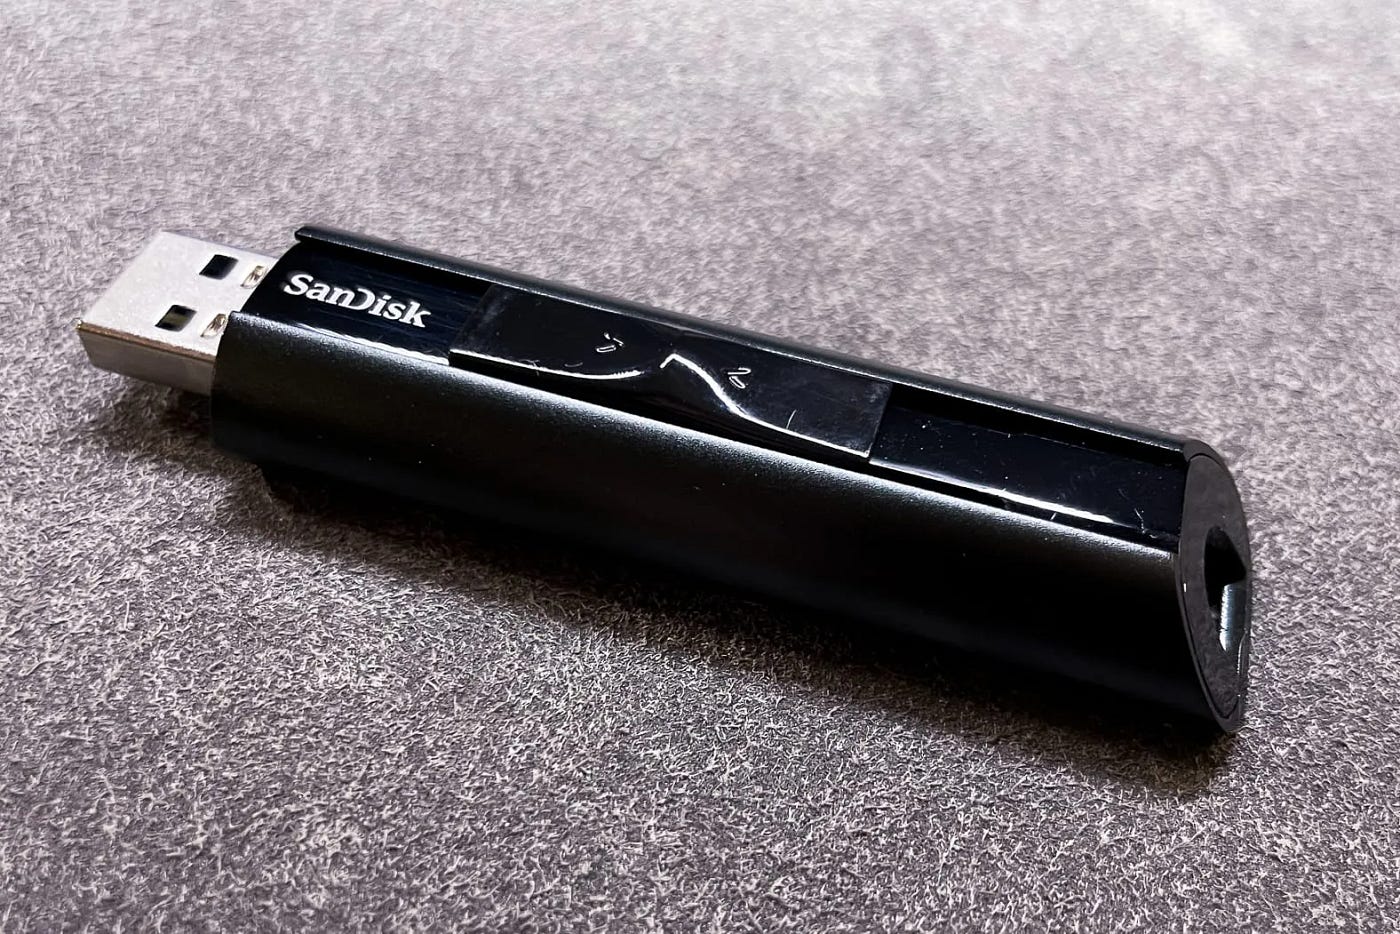 SanDisk Extreme Pro Flash Drive, USB 3.2, Black